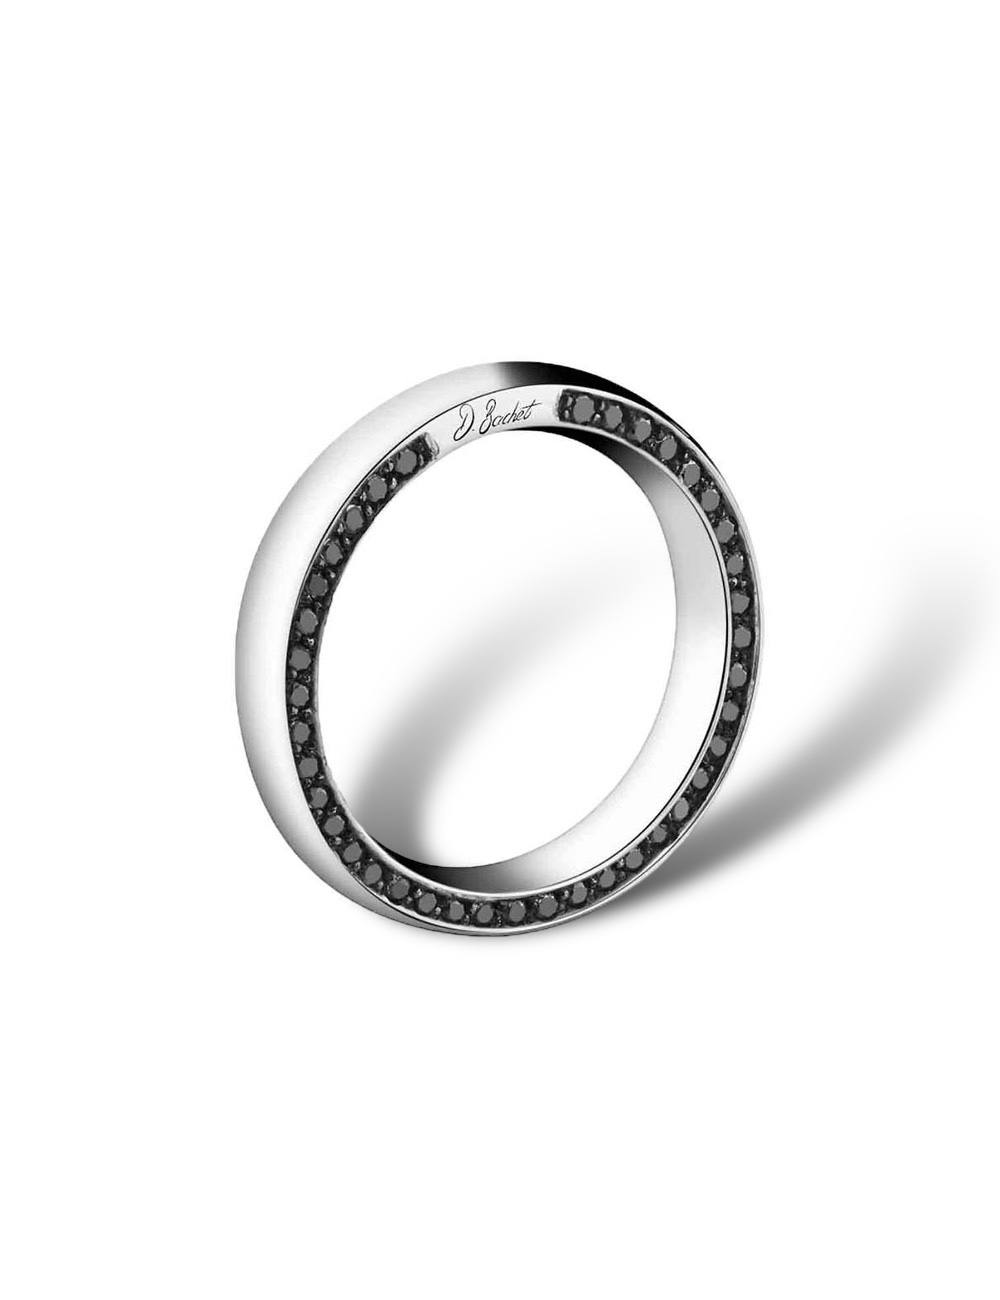 Unisex 'Subtile' platinum ring, set with black and white diamonds on both edges of the band.